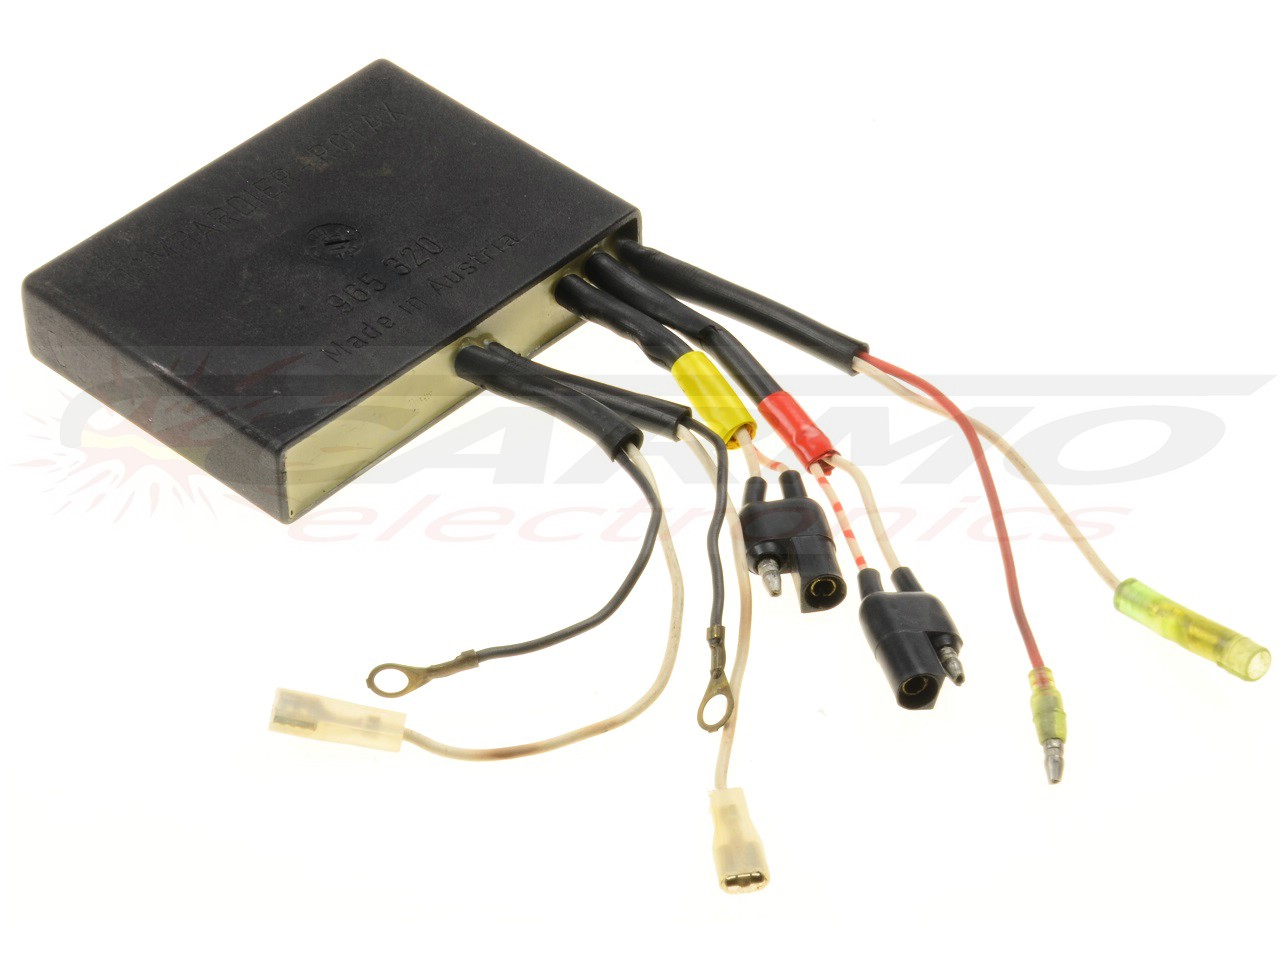 Rotax 912A 912UL electronic box SMD module CDI dispositif de commande boîte noire bombardier (965-320, 912 060 PKT)